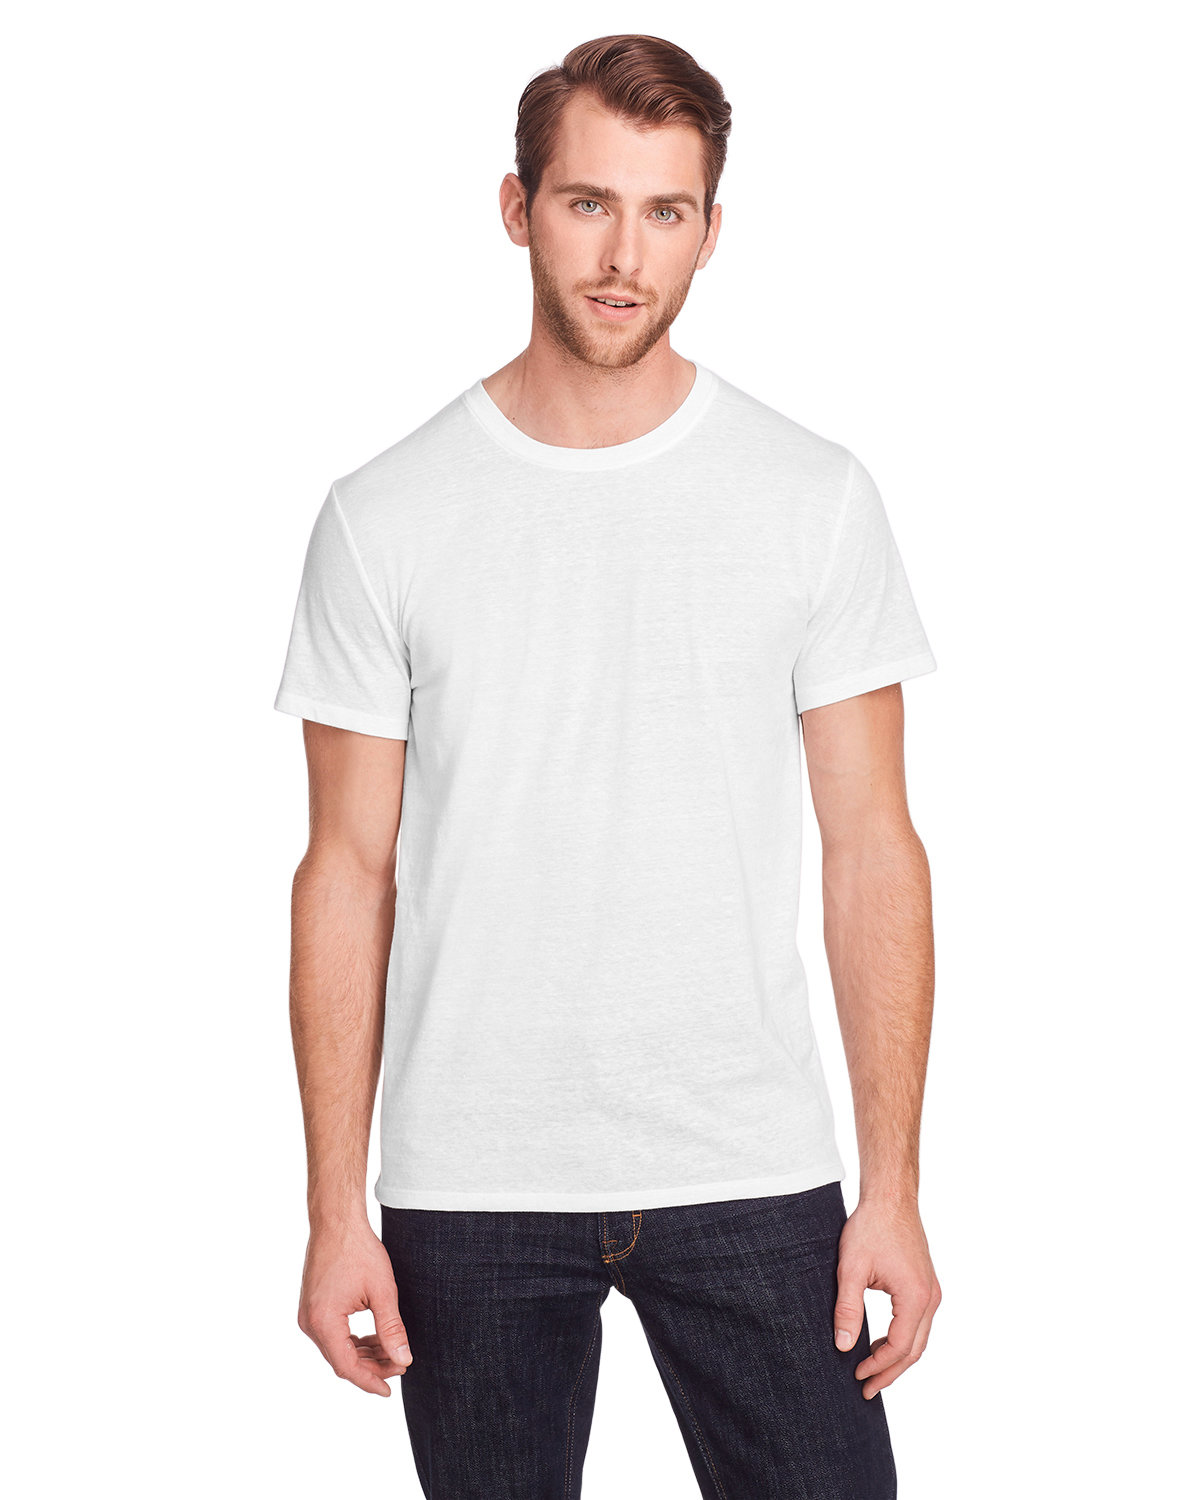 Threadfast Unisex Triblend Short-Sleeve T-Shirt SOLID WHT TRBLND 